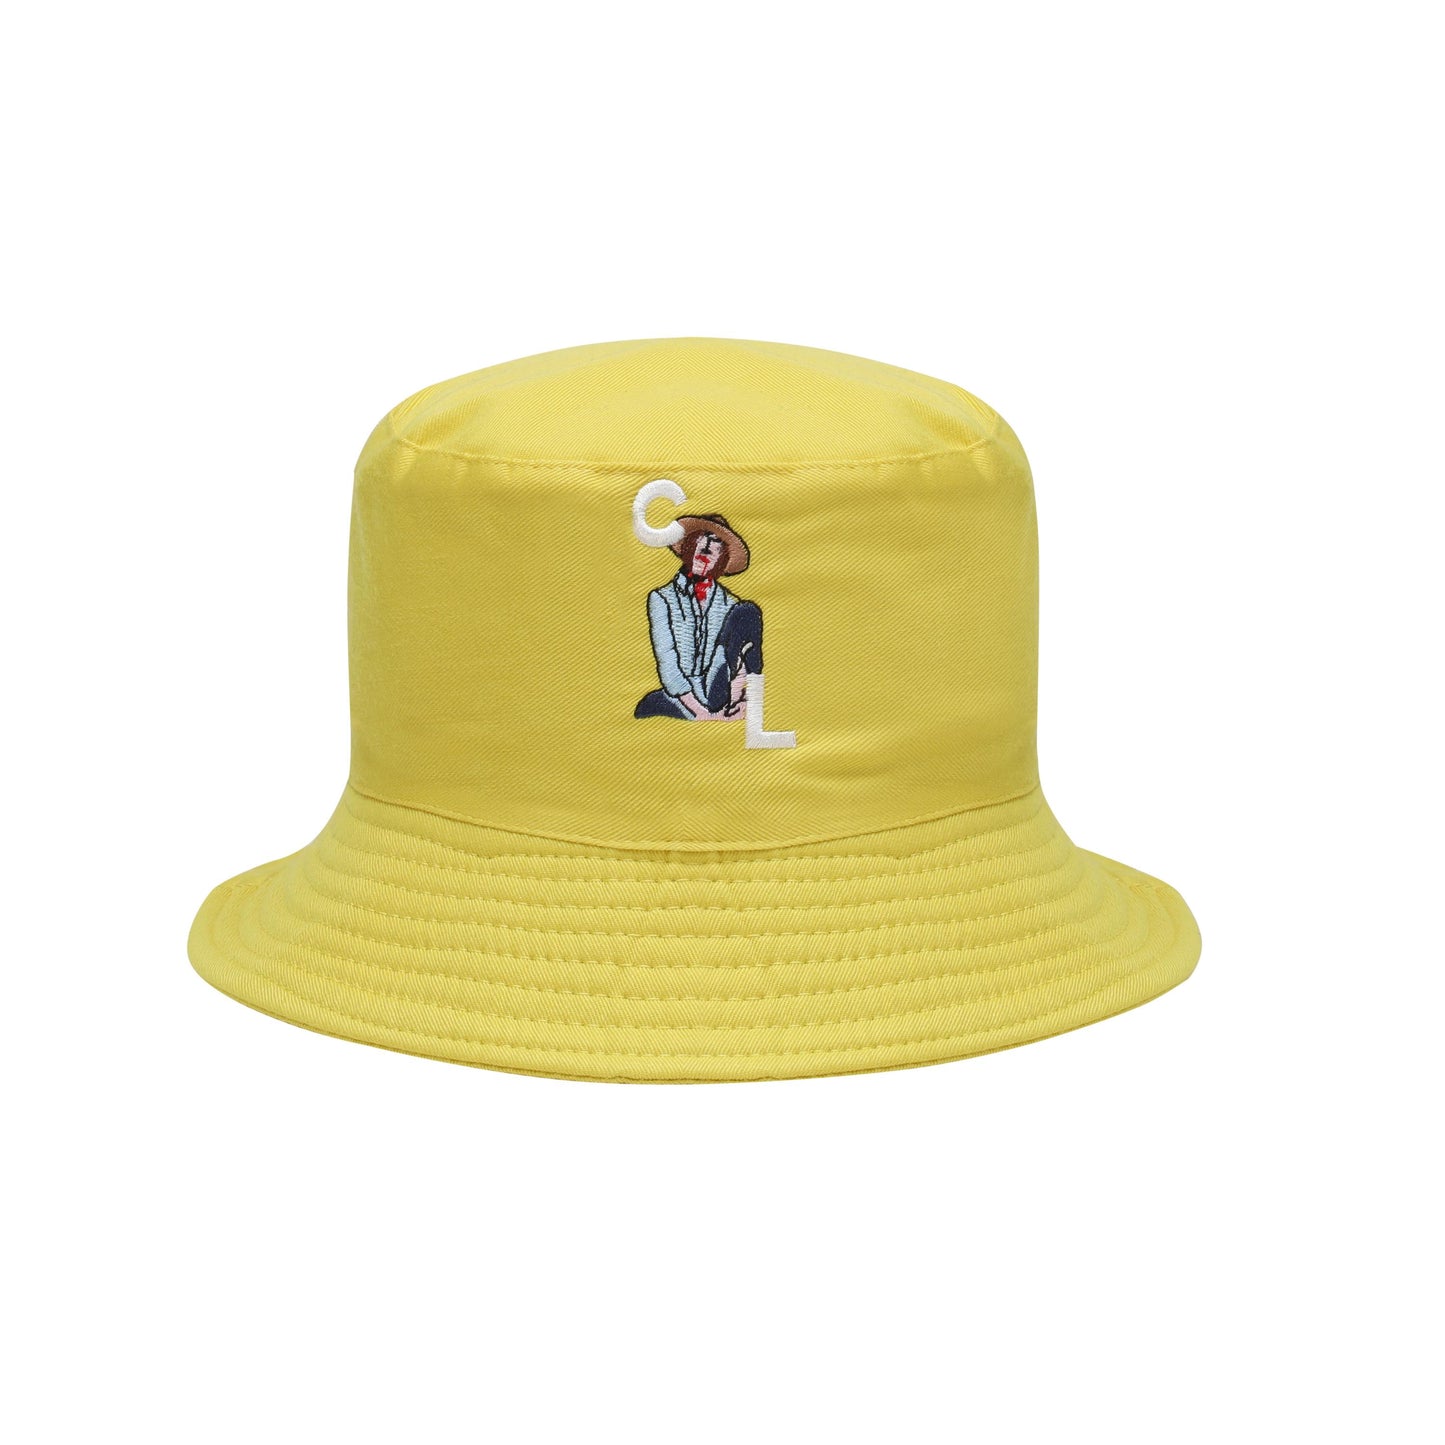 CL BUCKET HAT